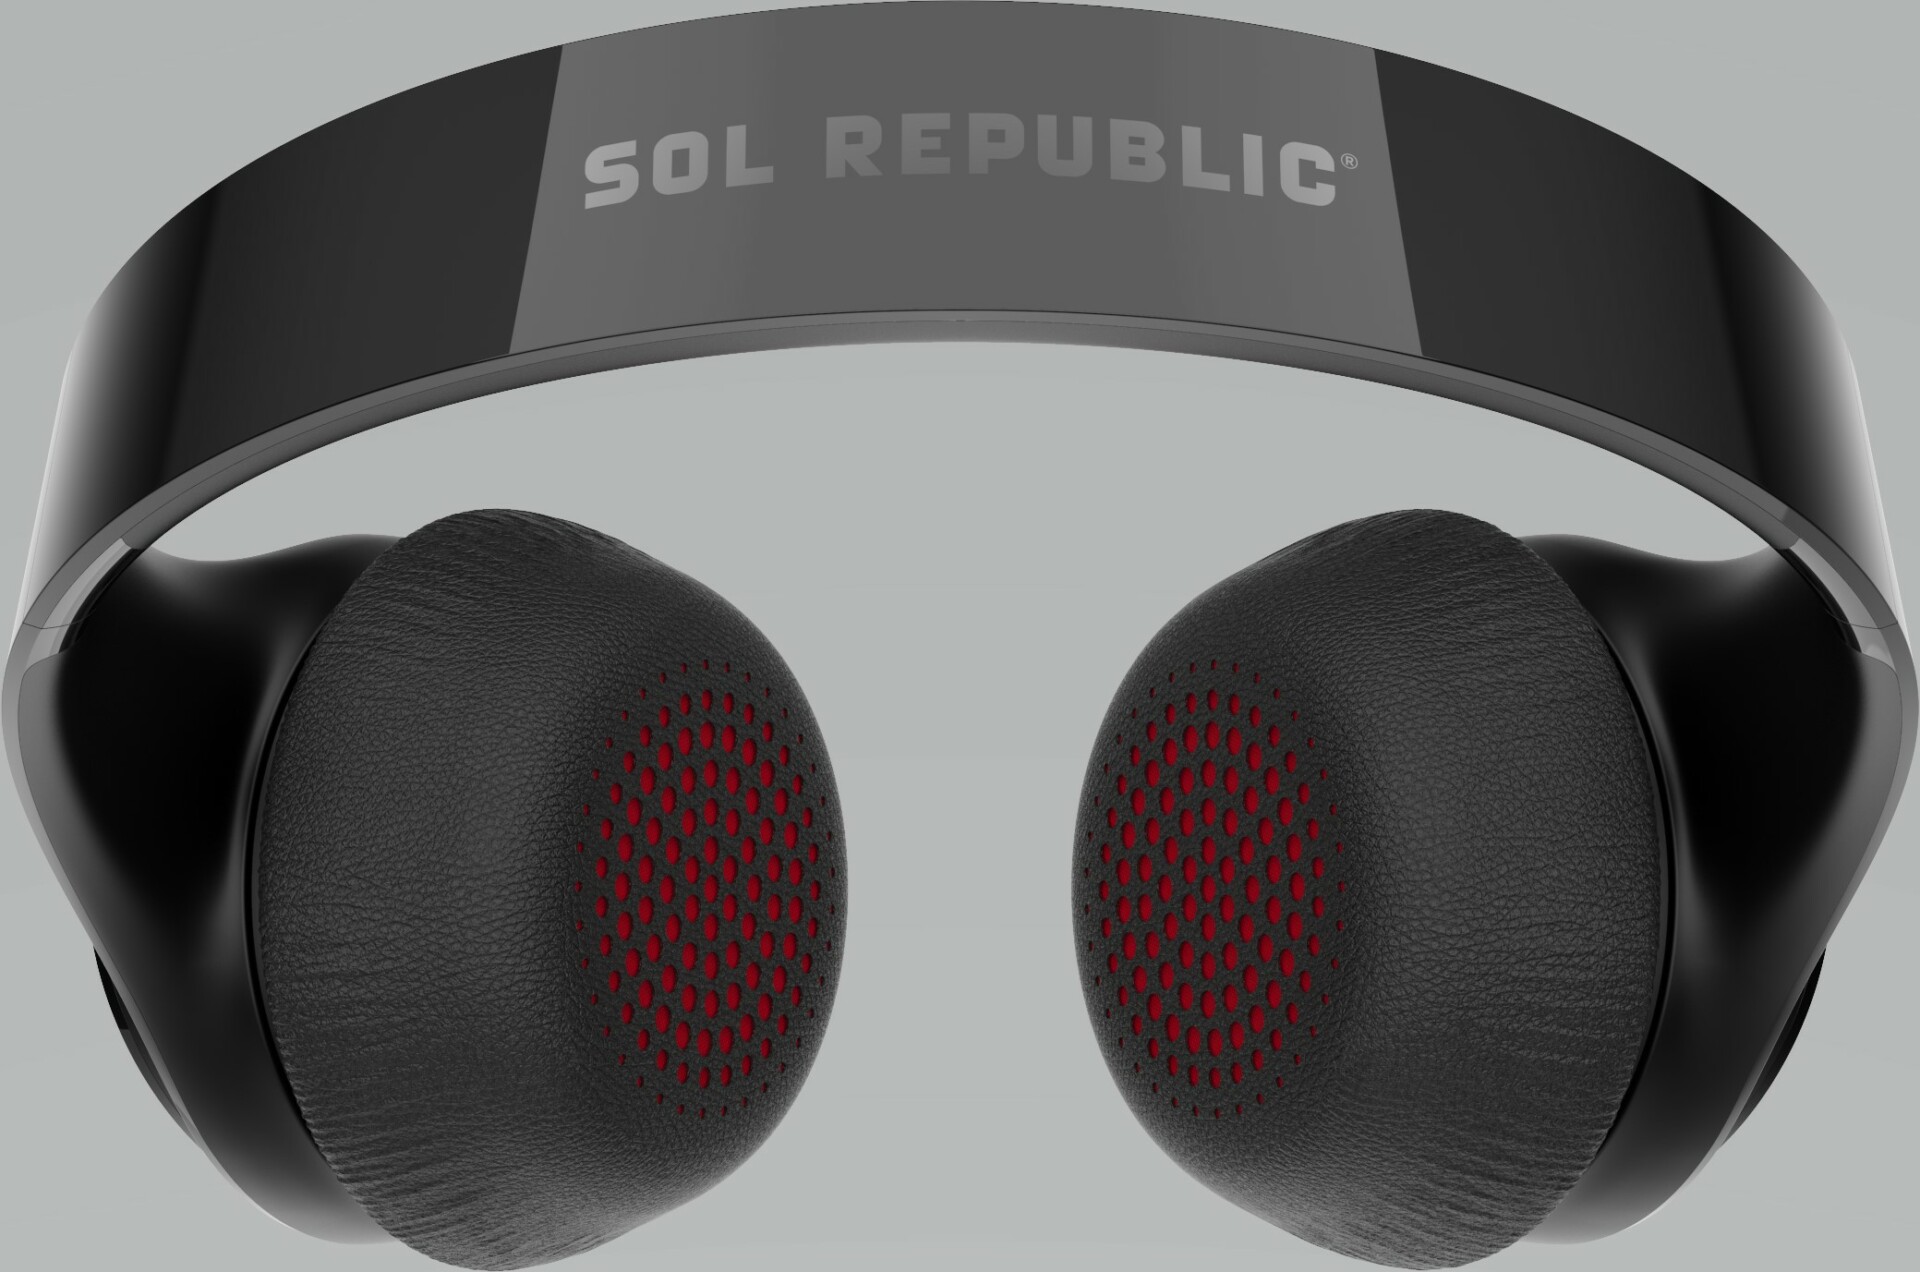 Sol Republic Soundtrack headphones in black on gray background.